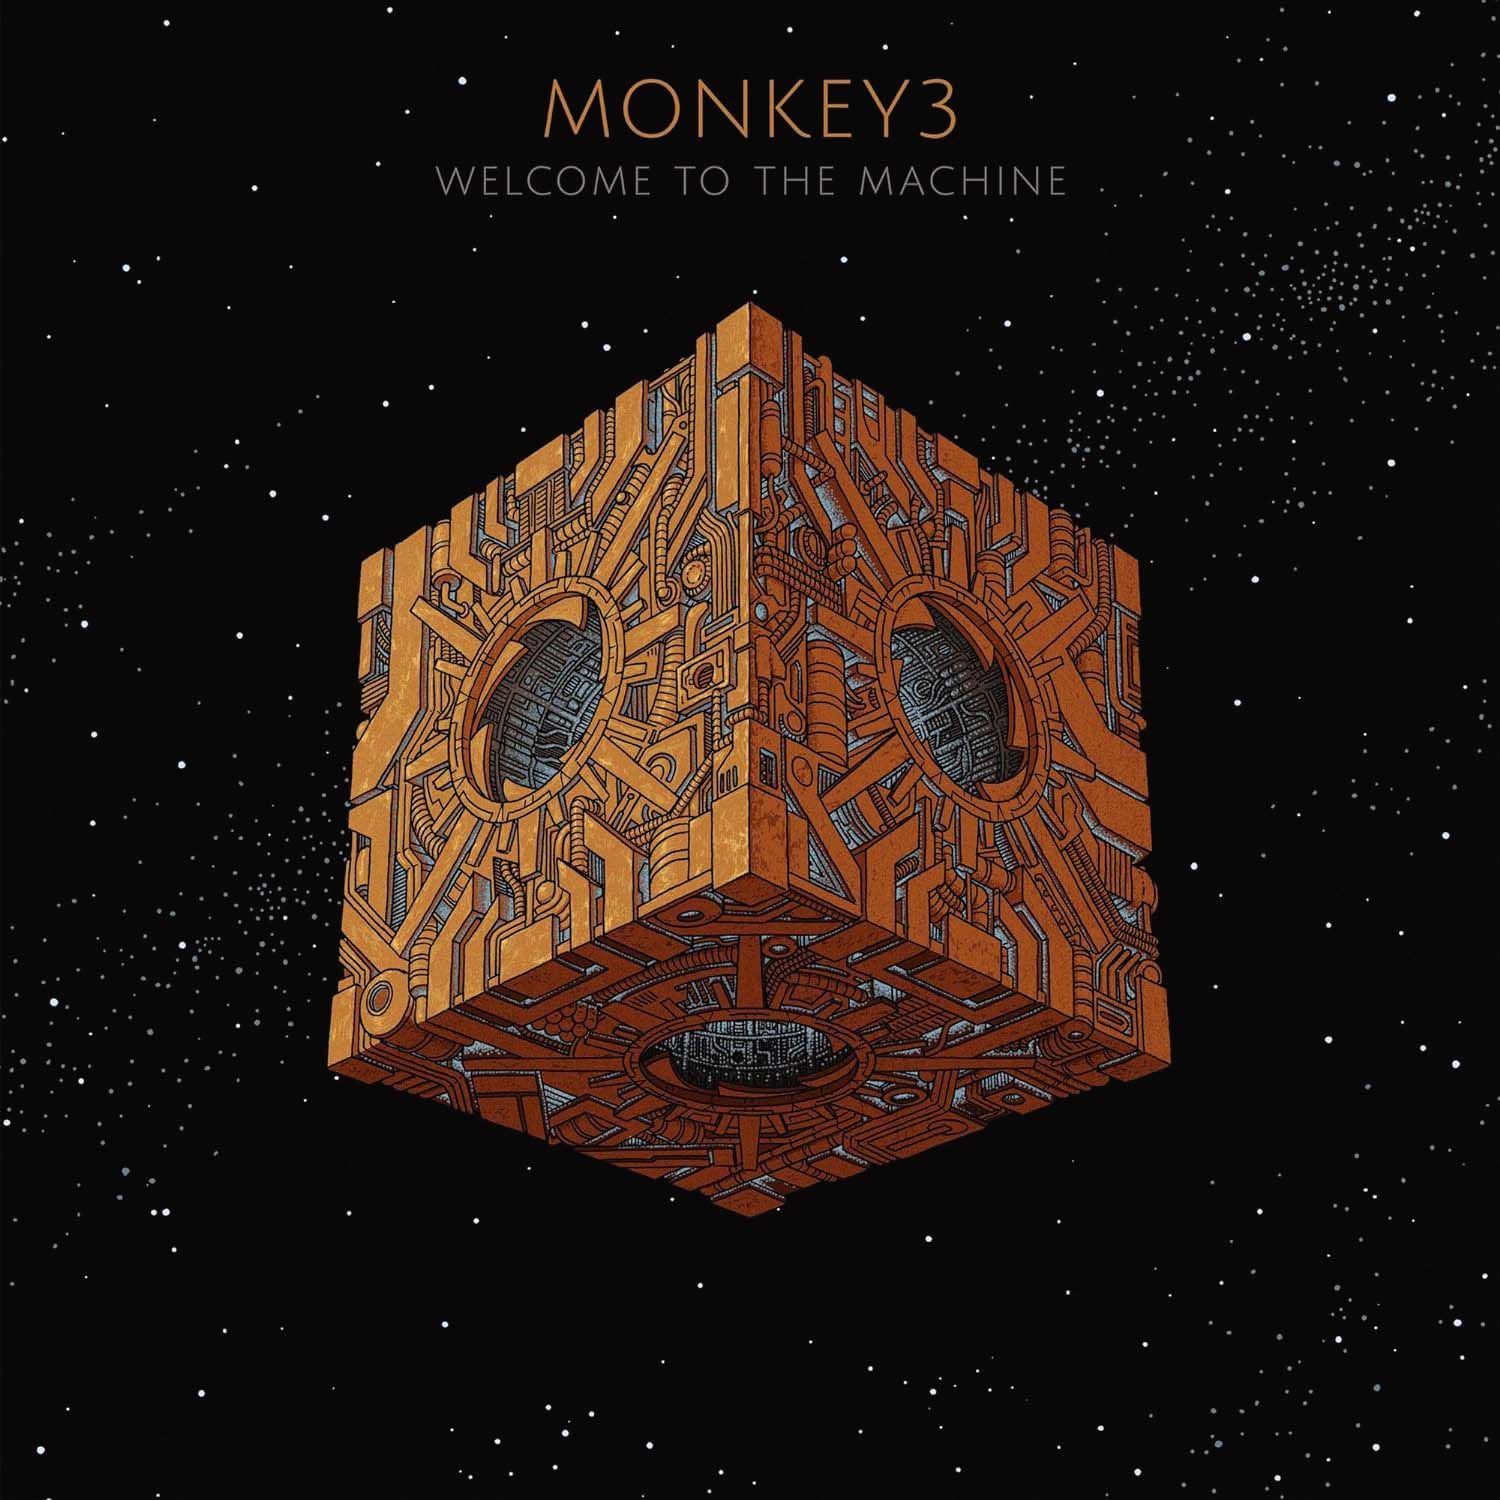 Monkey3 - Welcome To The Machine